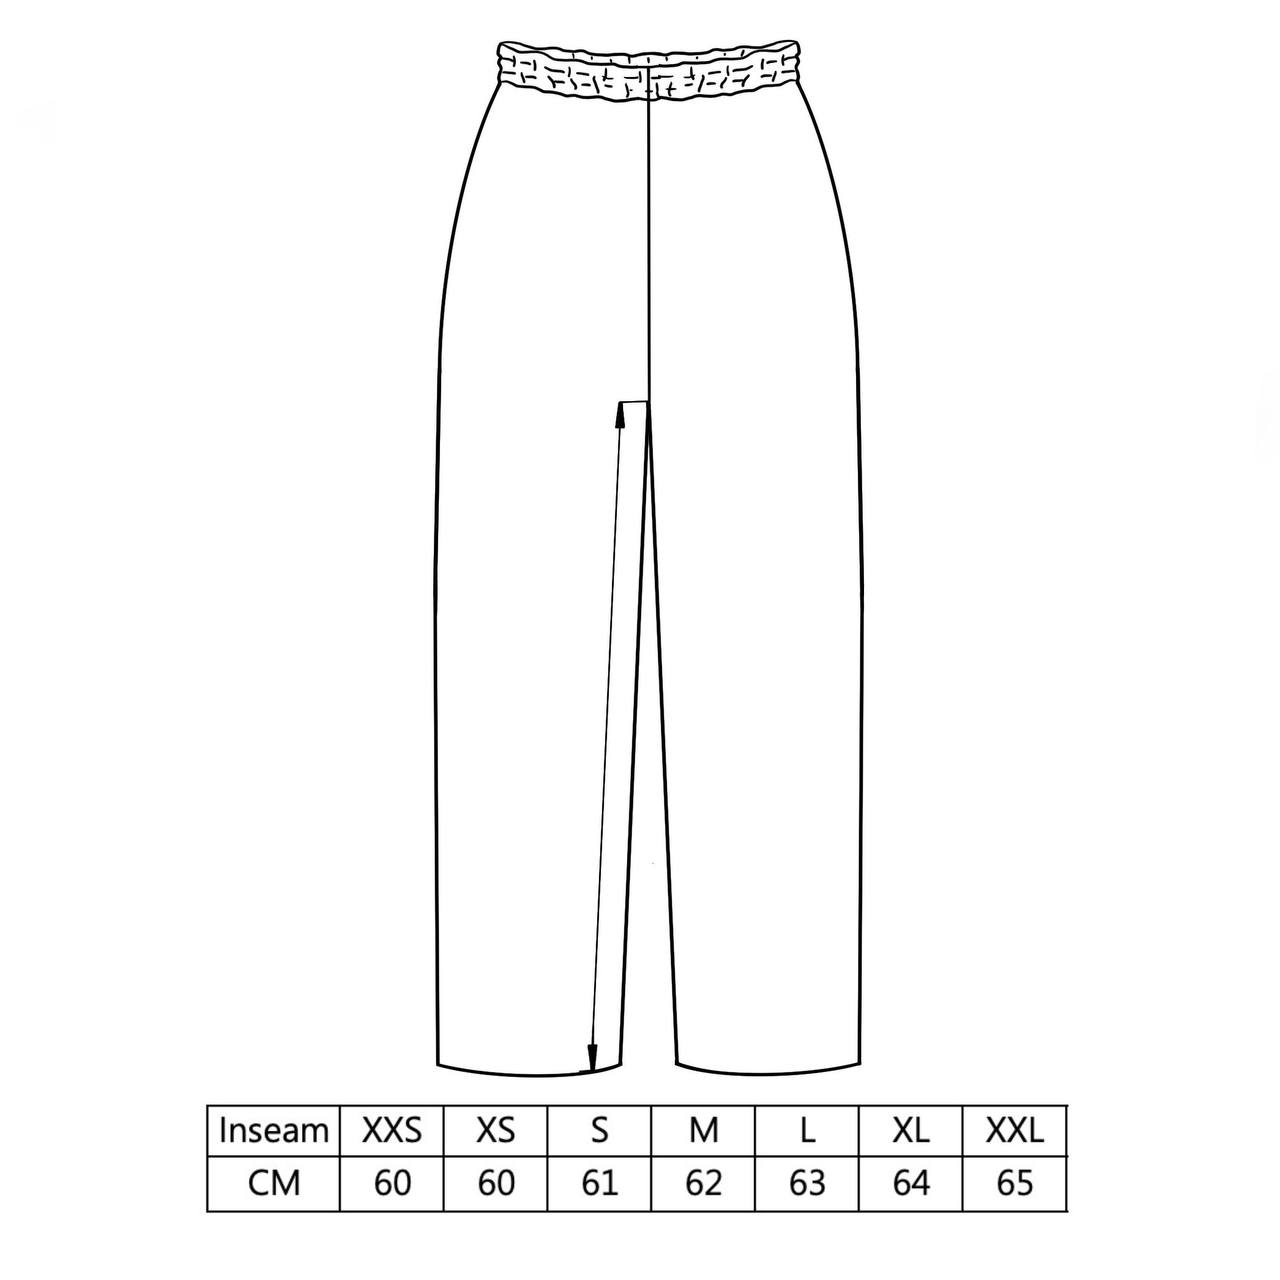 Plus Size Style: What Length Pants Should I Get? | PlusbyDesign.com